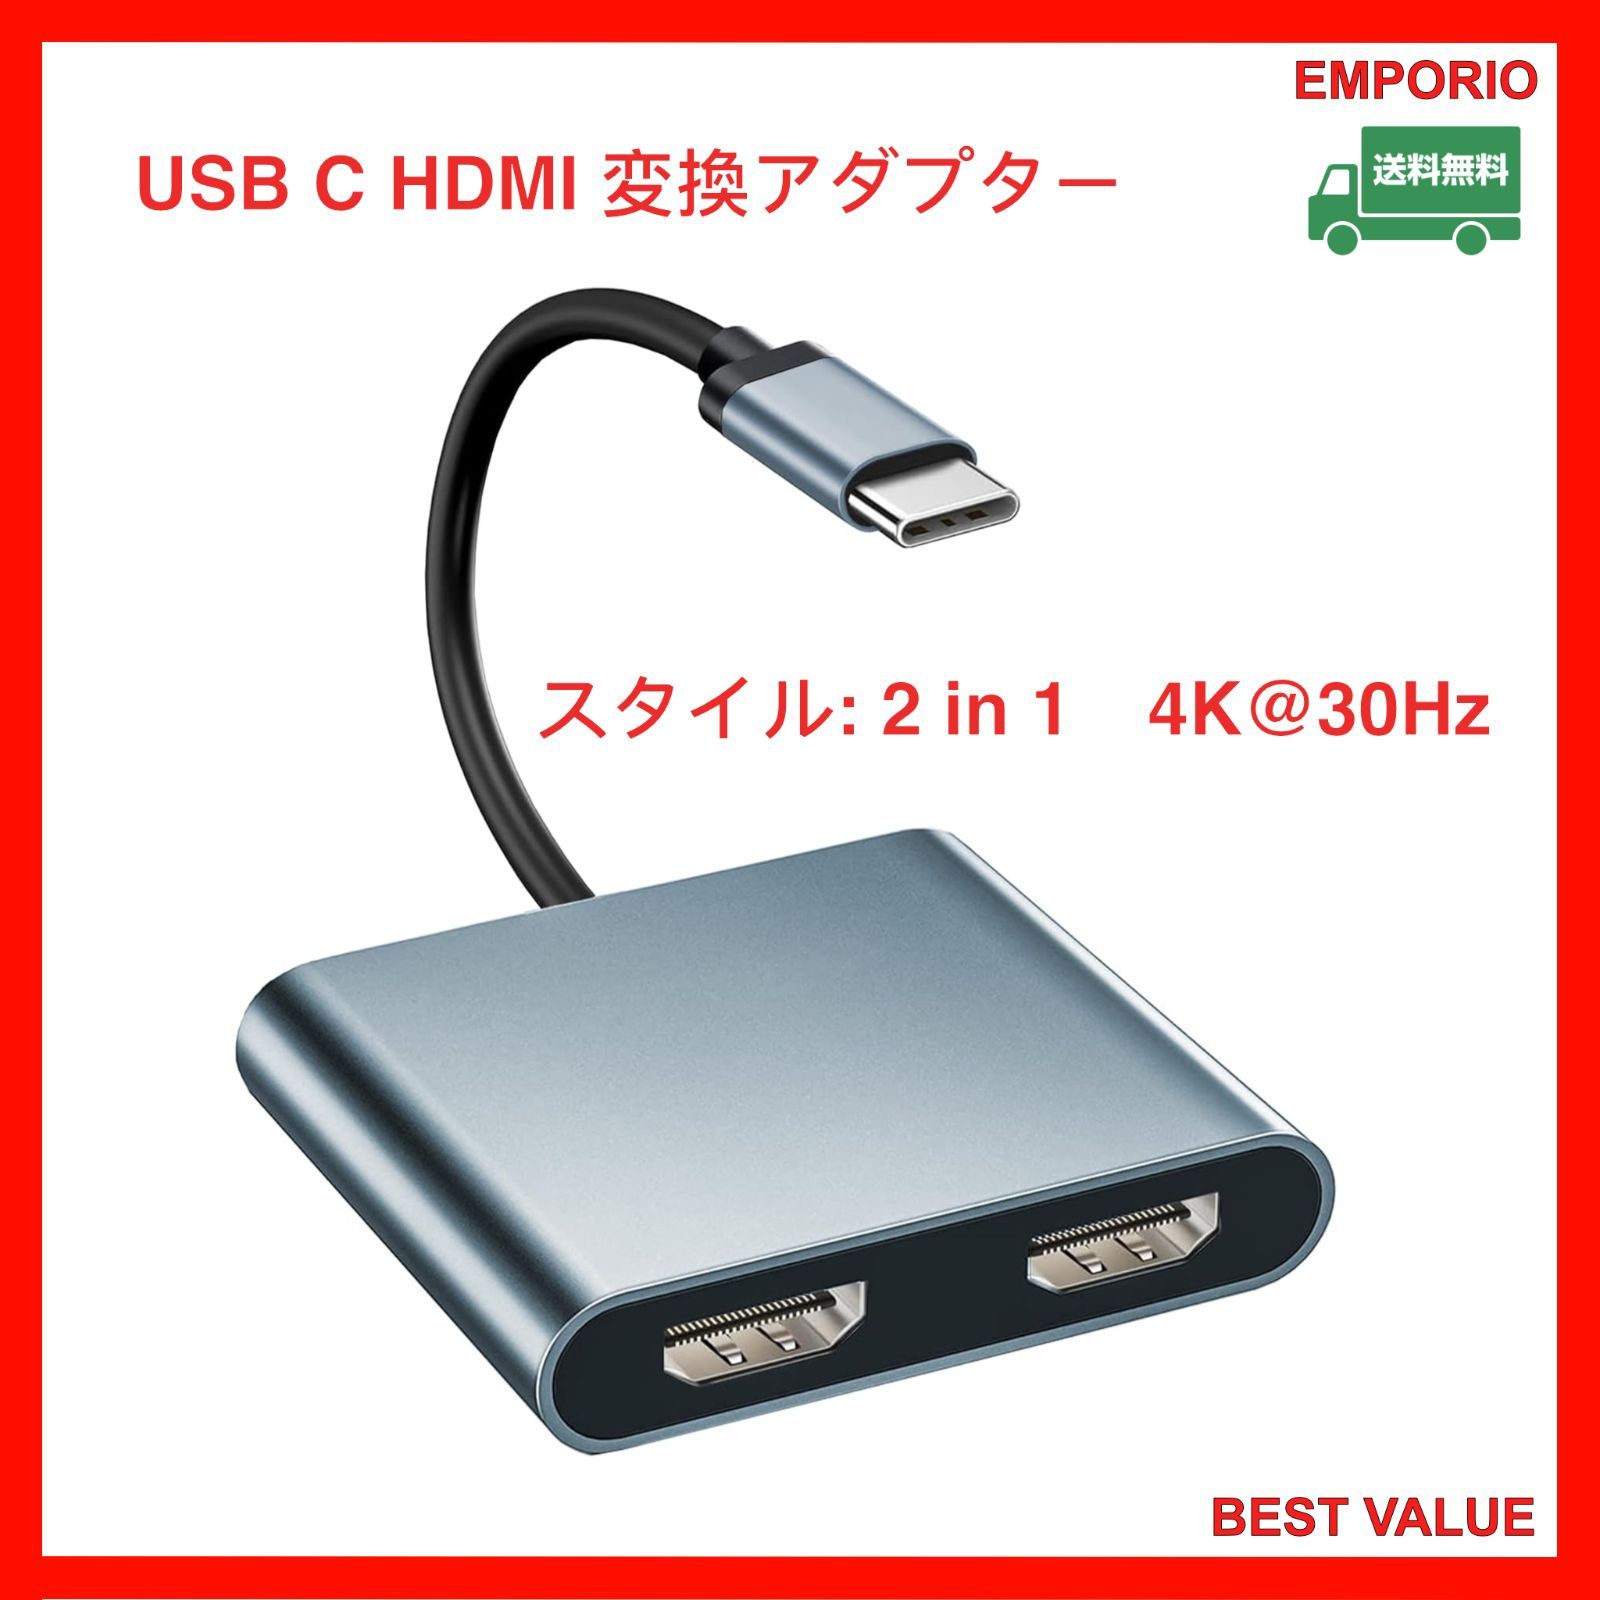 USB C HDMI 変換アダプター Aibilangose デュアル HDMI Type-C マルチディスプレイアダプタ 3画面 拡張 複